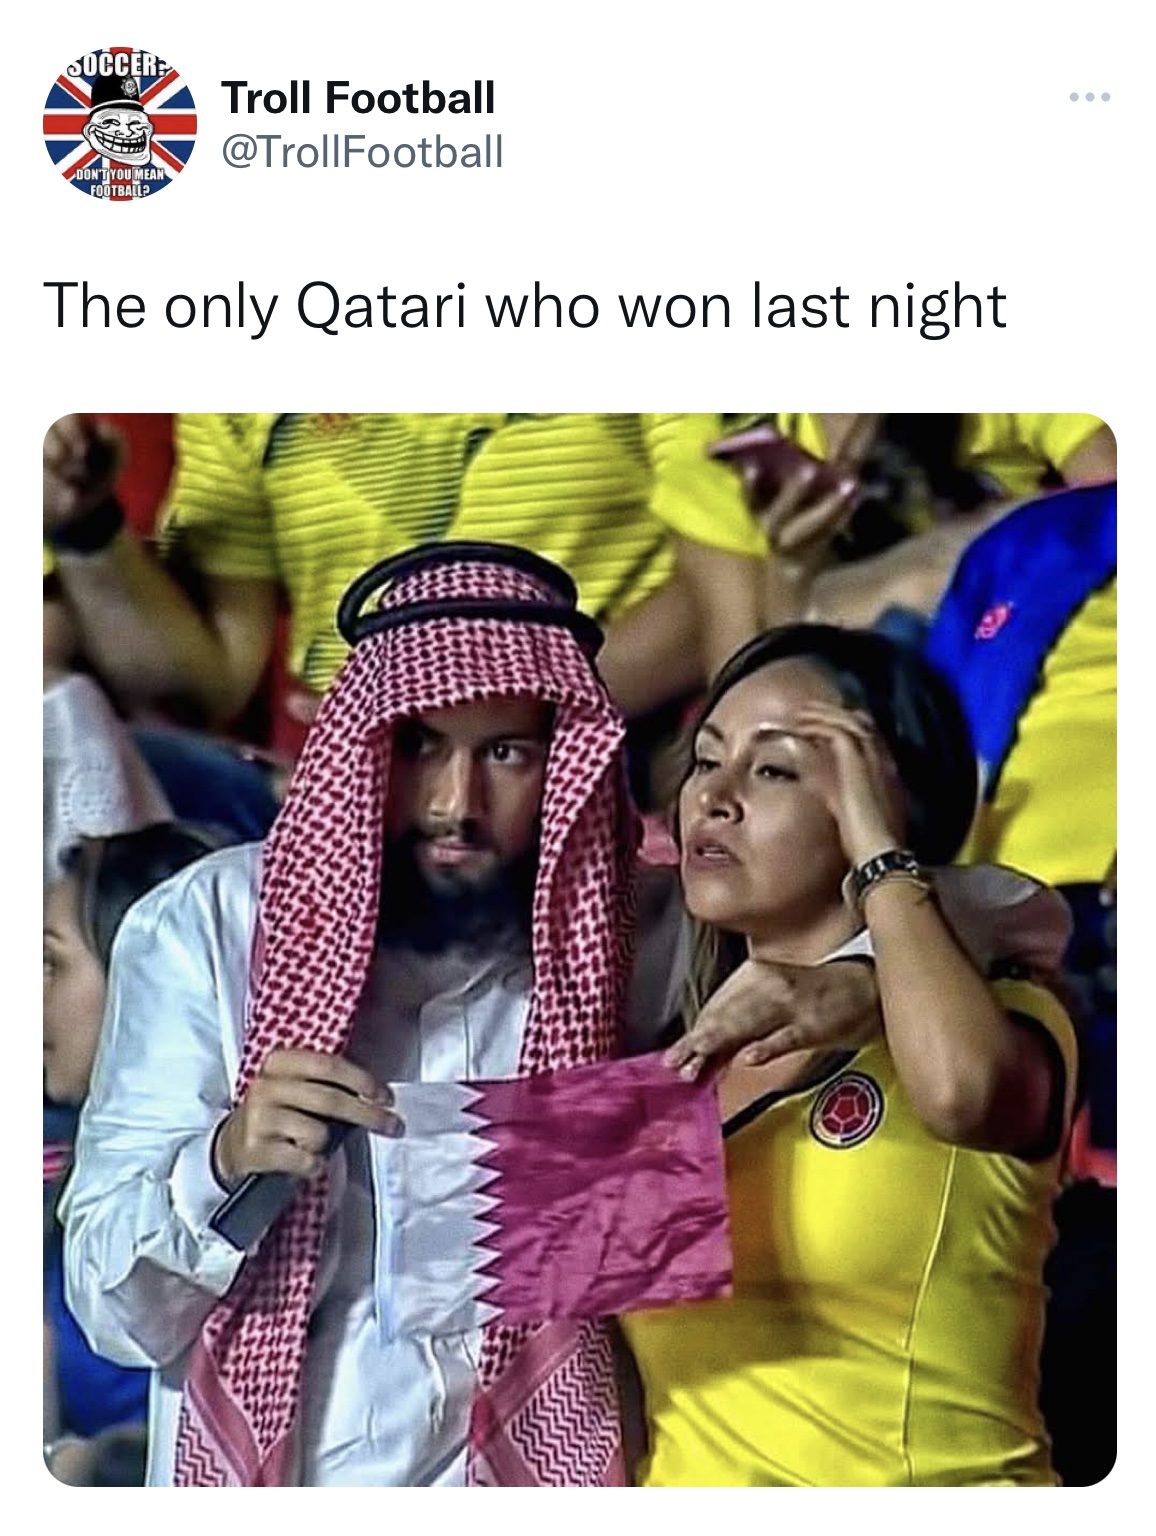 tweets roasting celebs - fun - Occi Troll Football The only Qatari who won last night